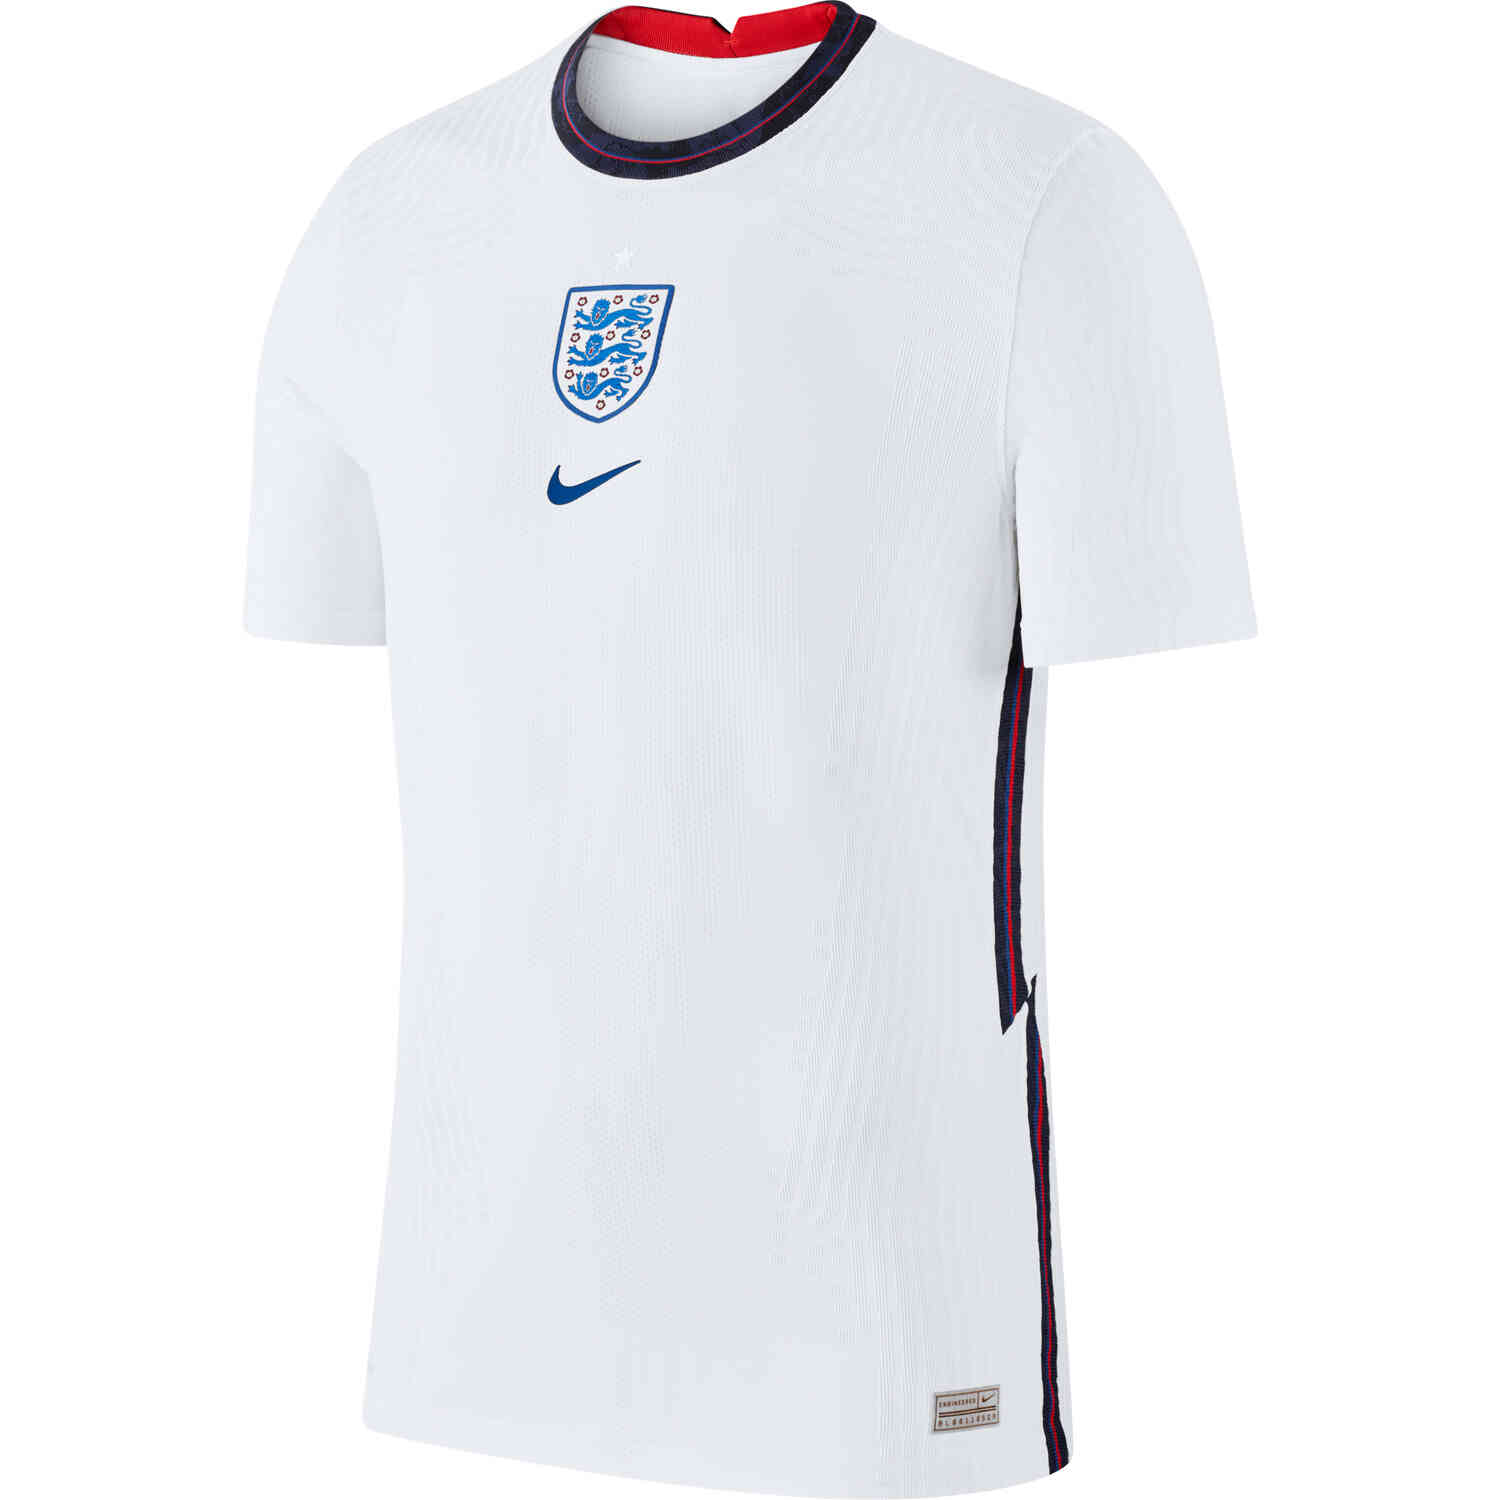 2020 Nike England Home Match Jersey - SoccerPro